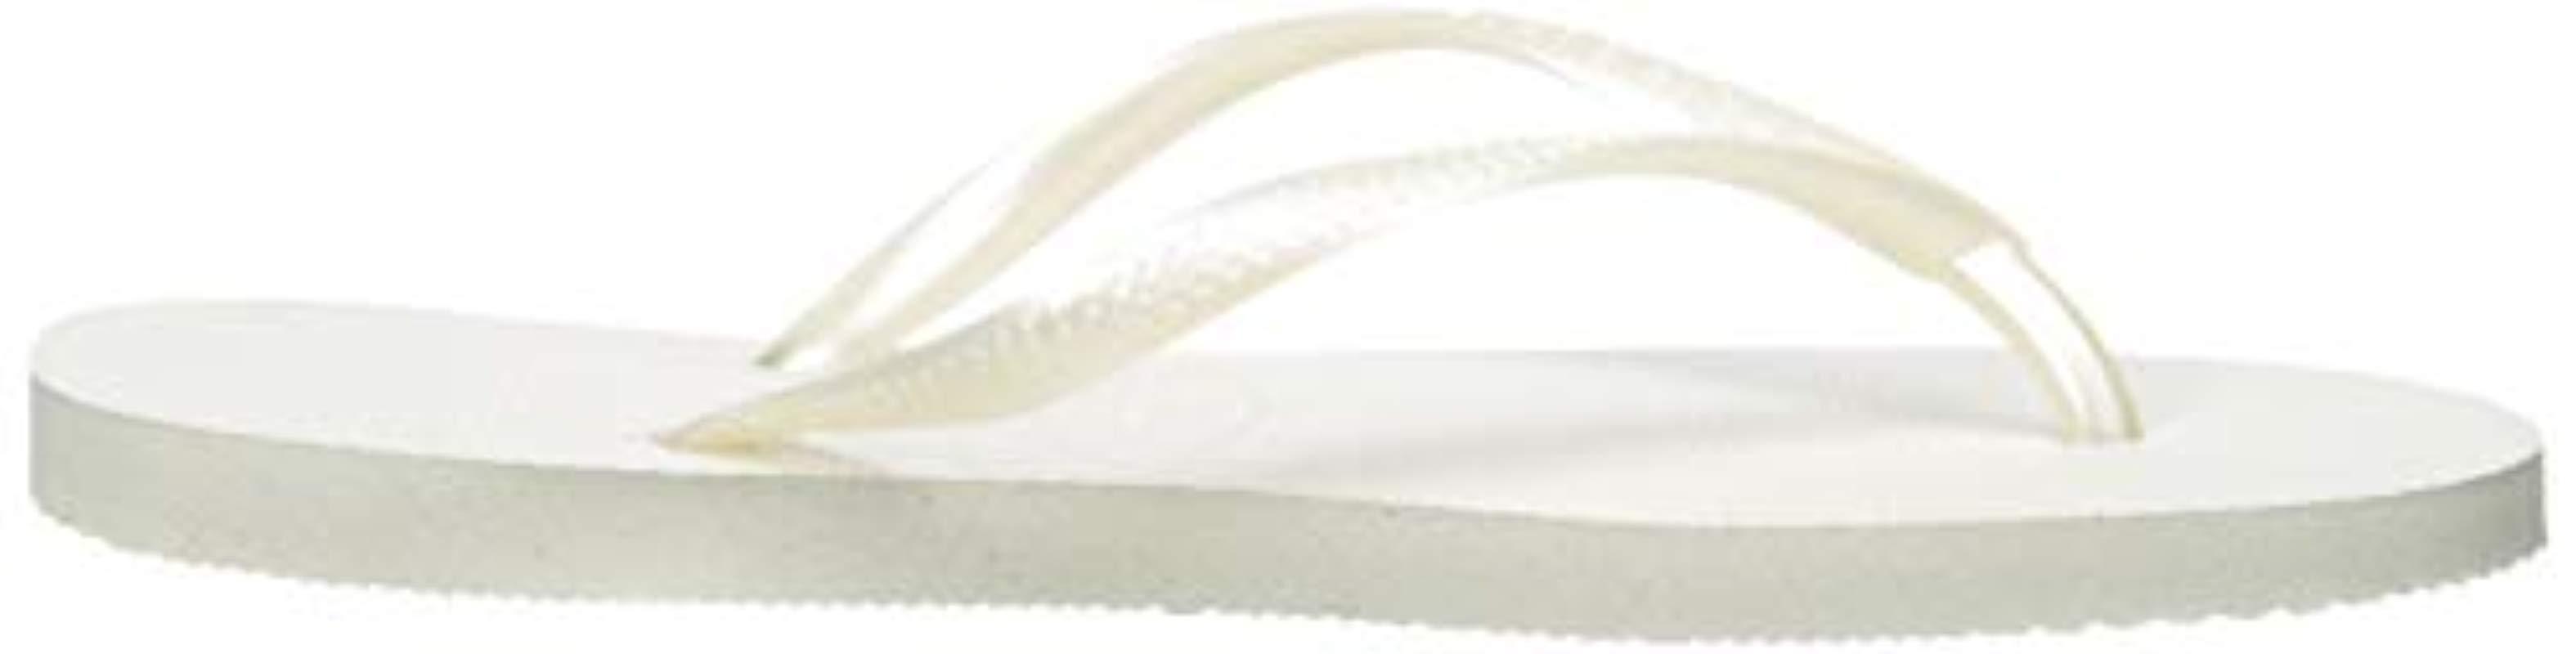 Havaianas Rubber Flip Sandal in White/Metallic (White) - Save 74% Lyst